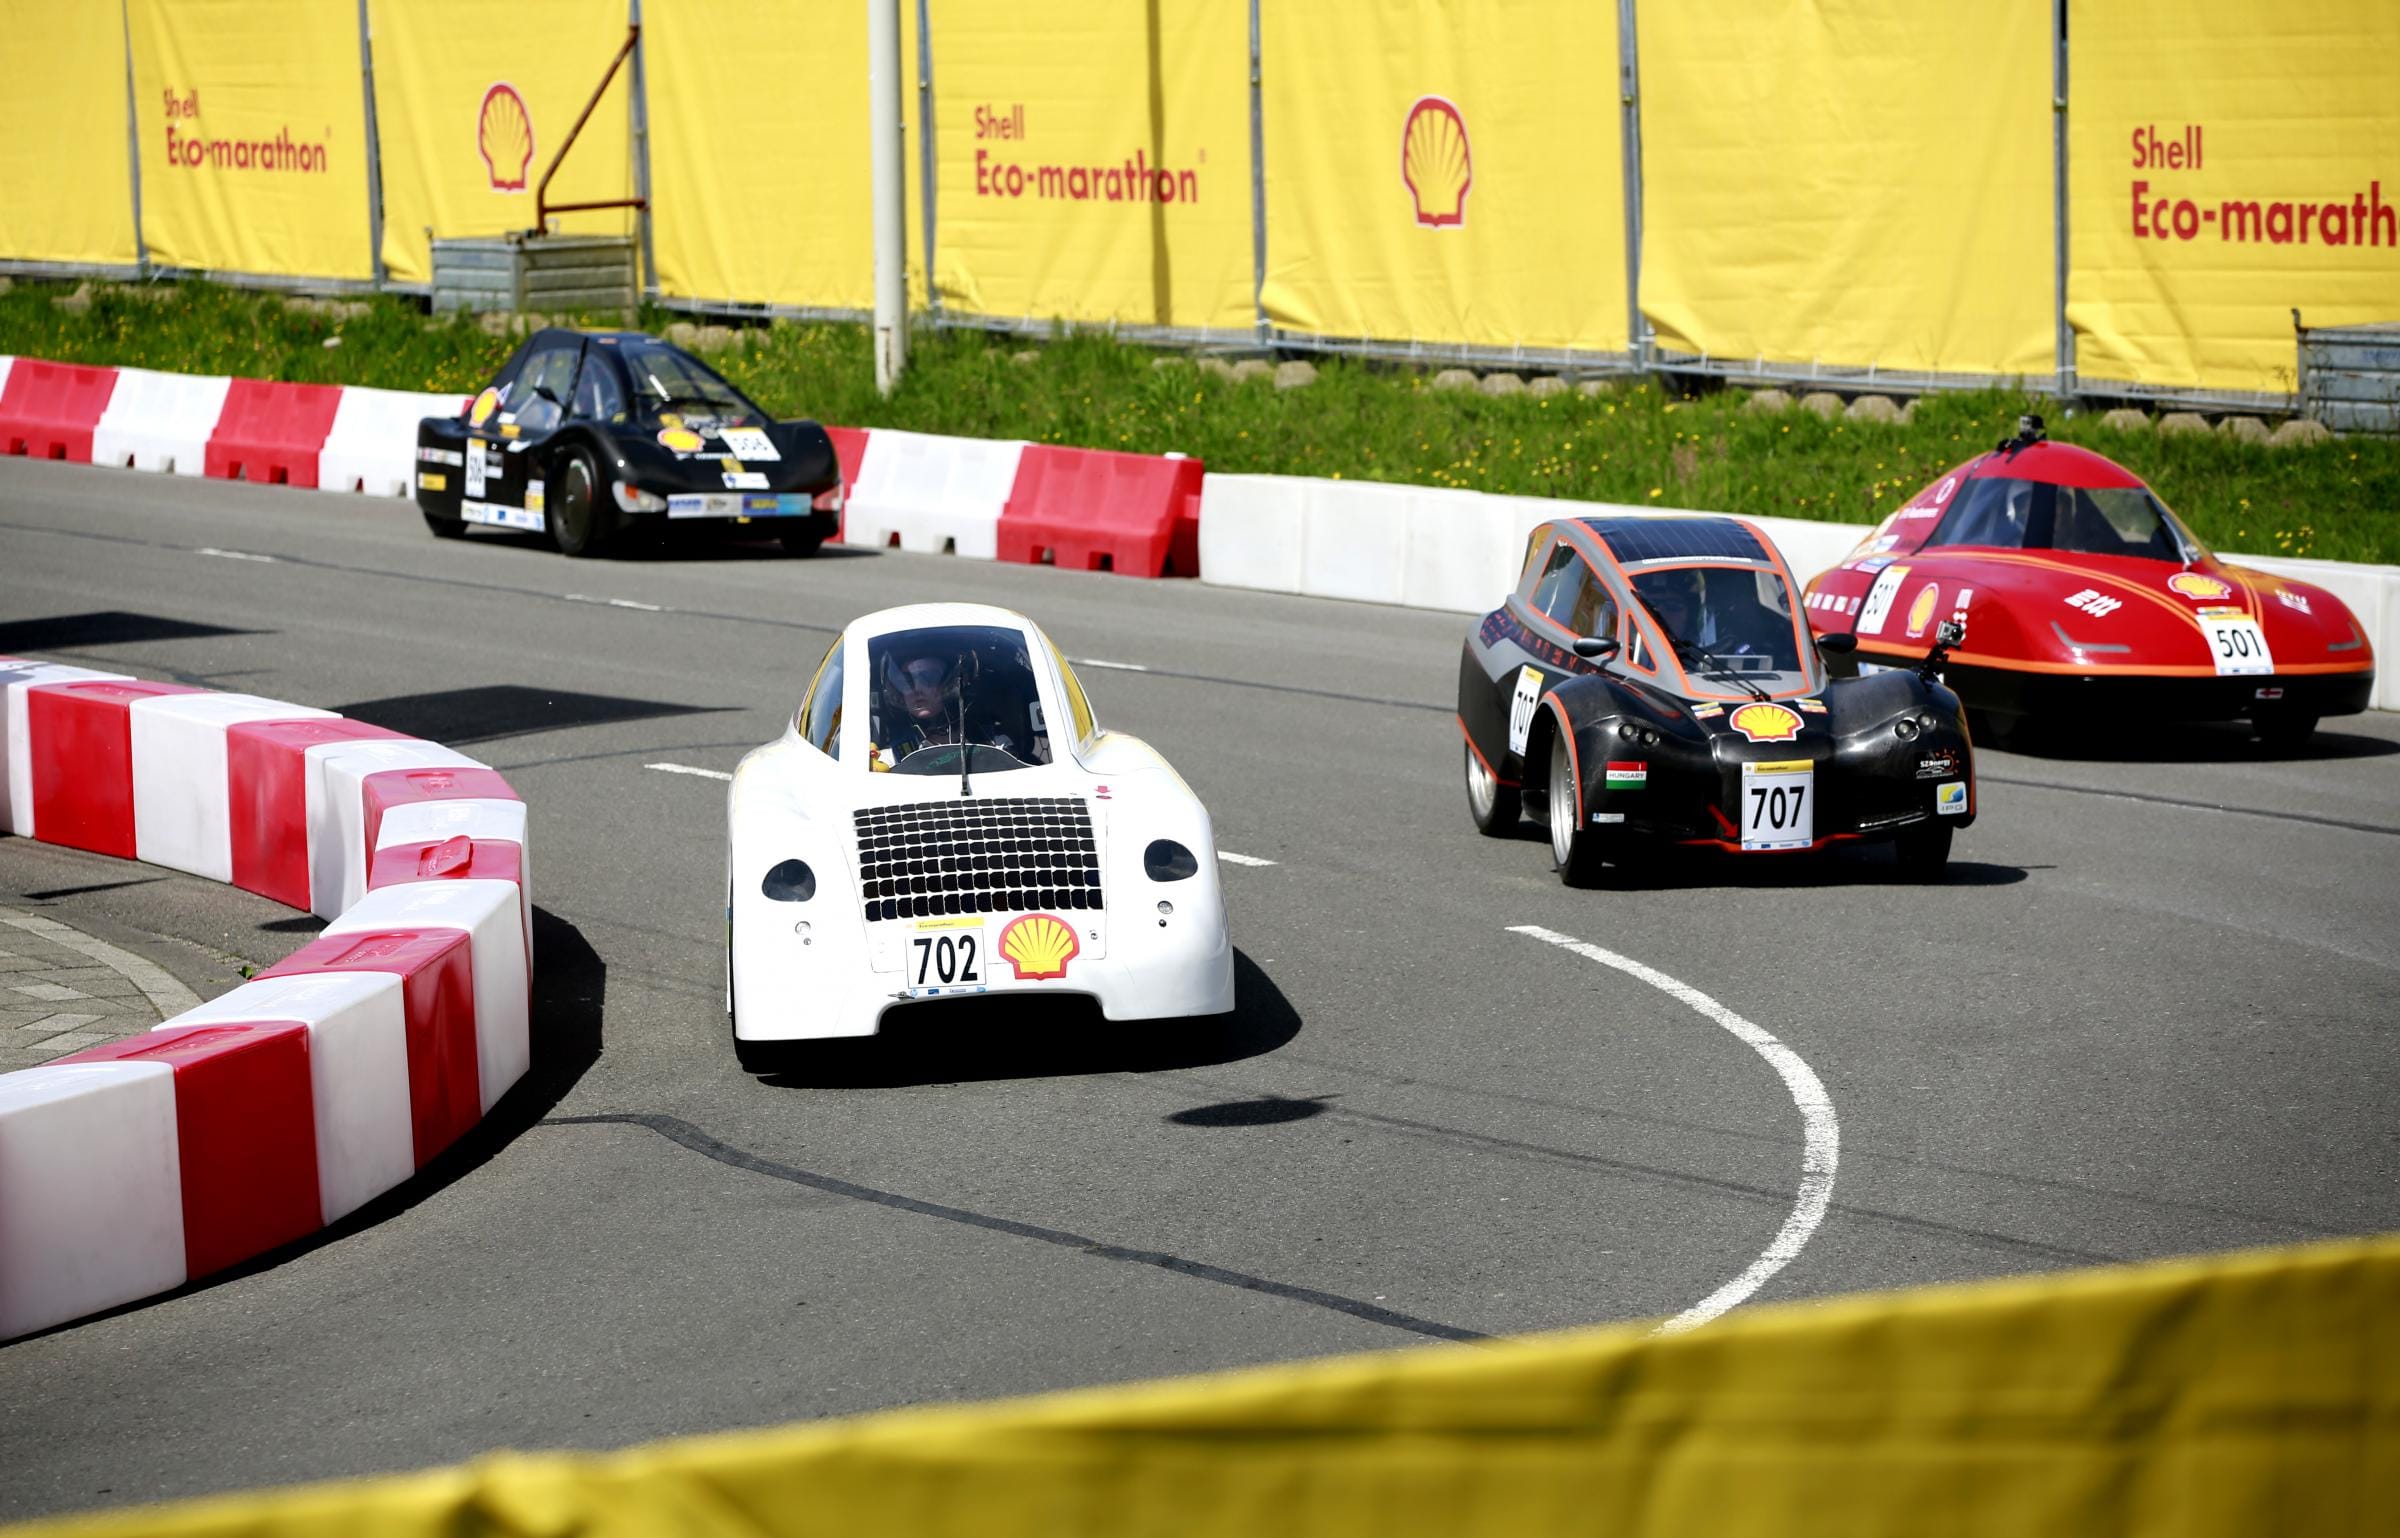 Shell Eco Marathon 2014: i prototipi di auto ecologiche